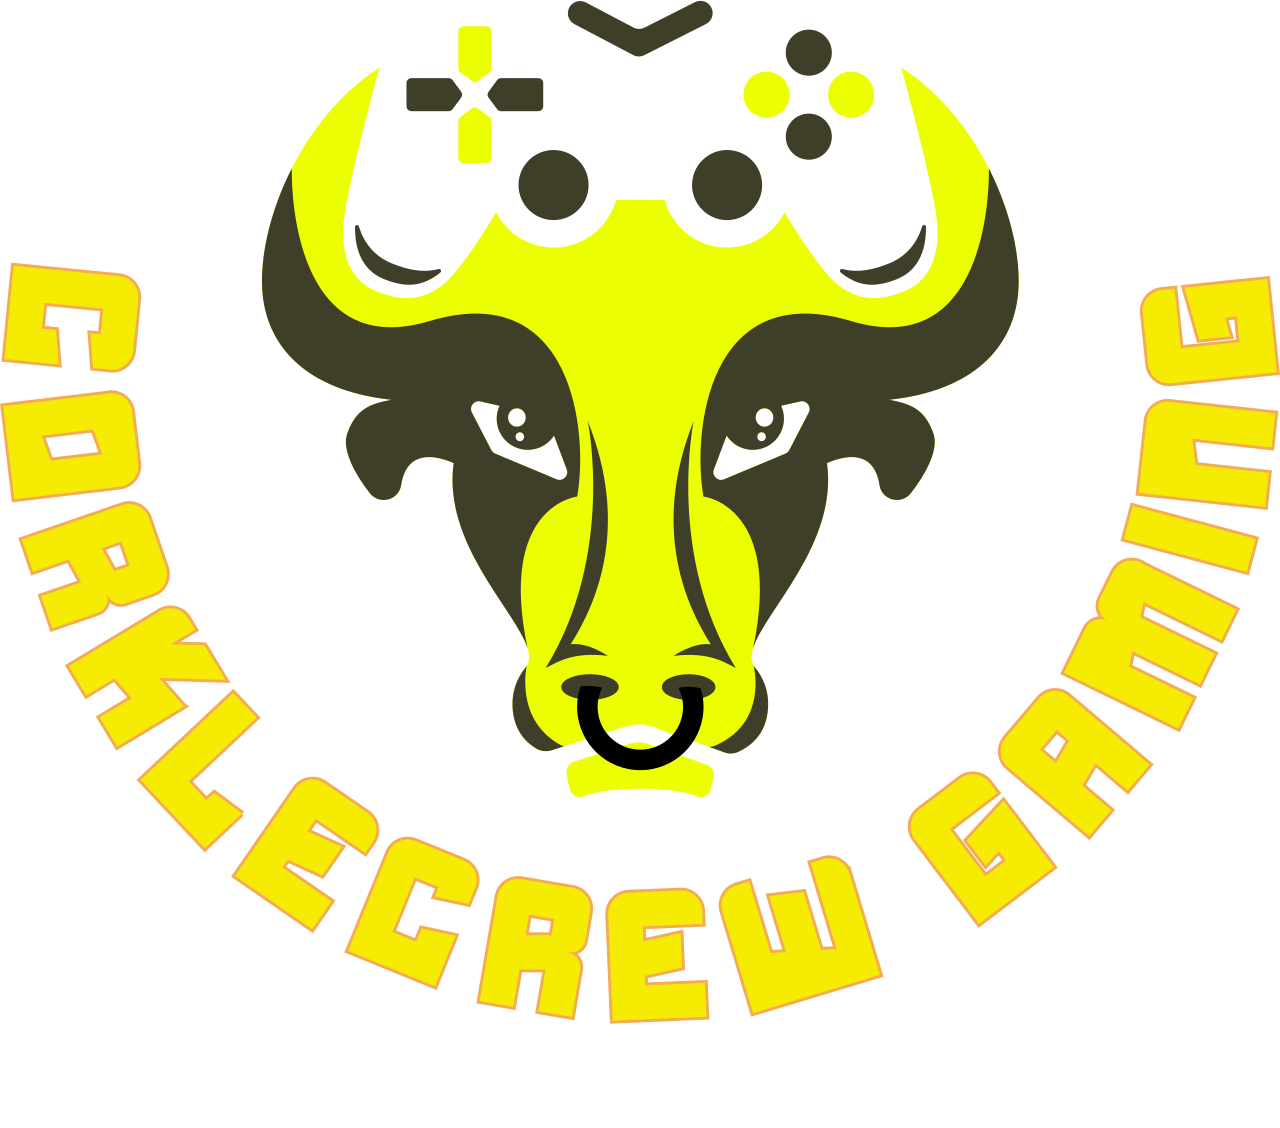 CorkleCrew Gaming's web page